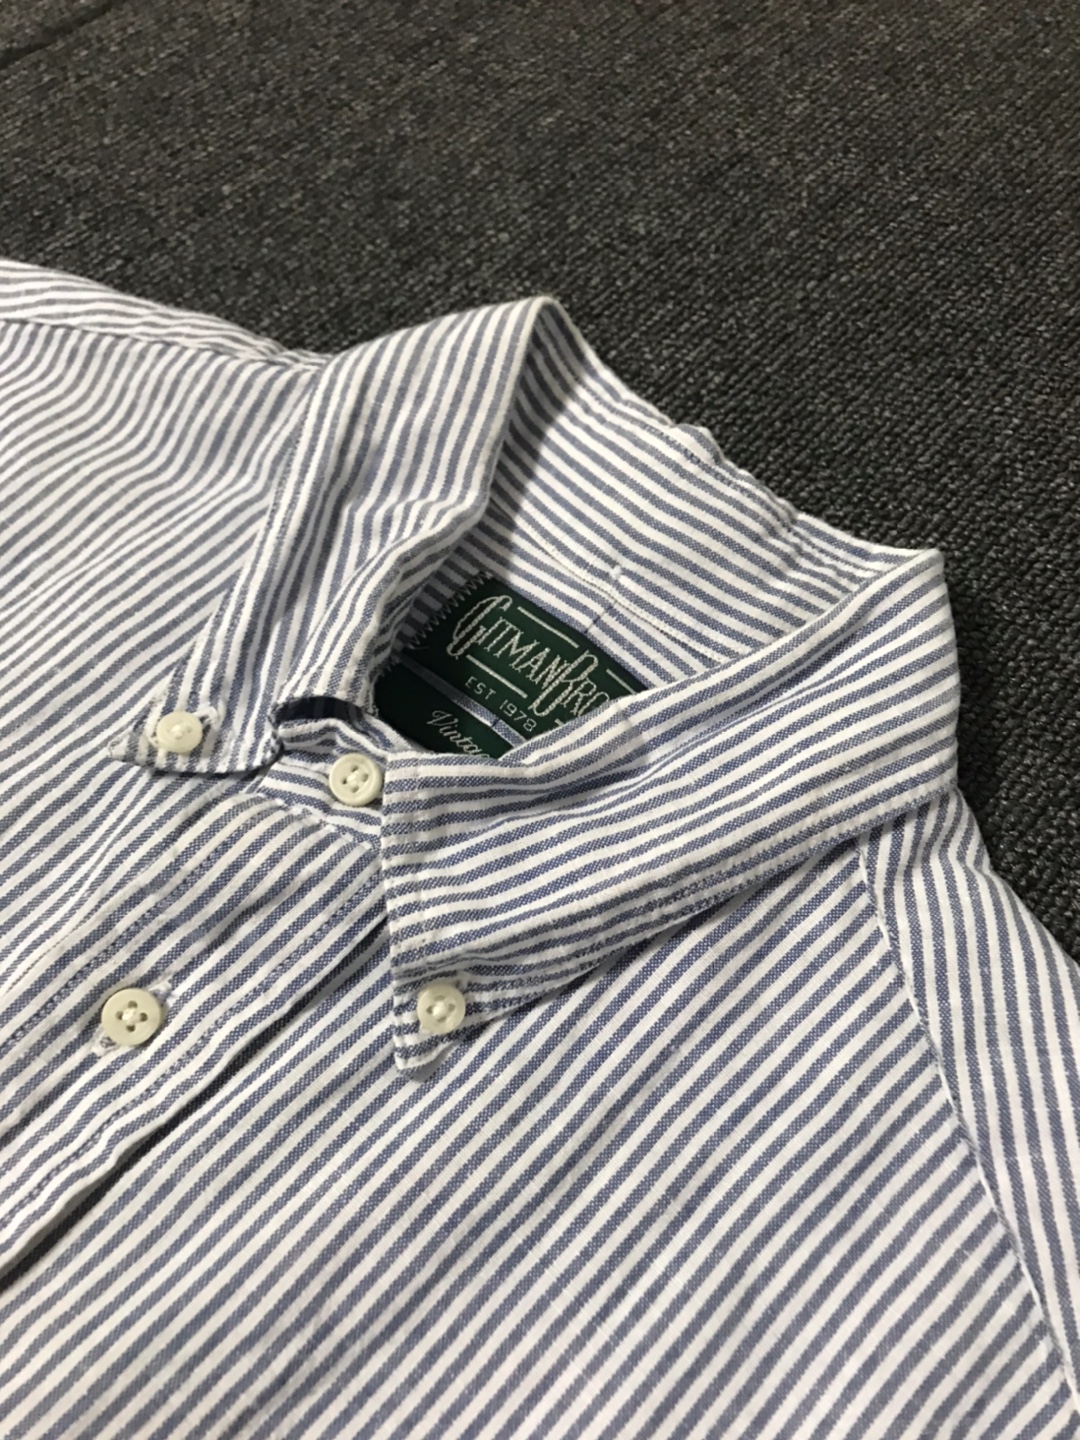 gitmanbros linen/cotton stripe bd shirt USA made (M size, ~103 추천)